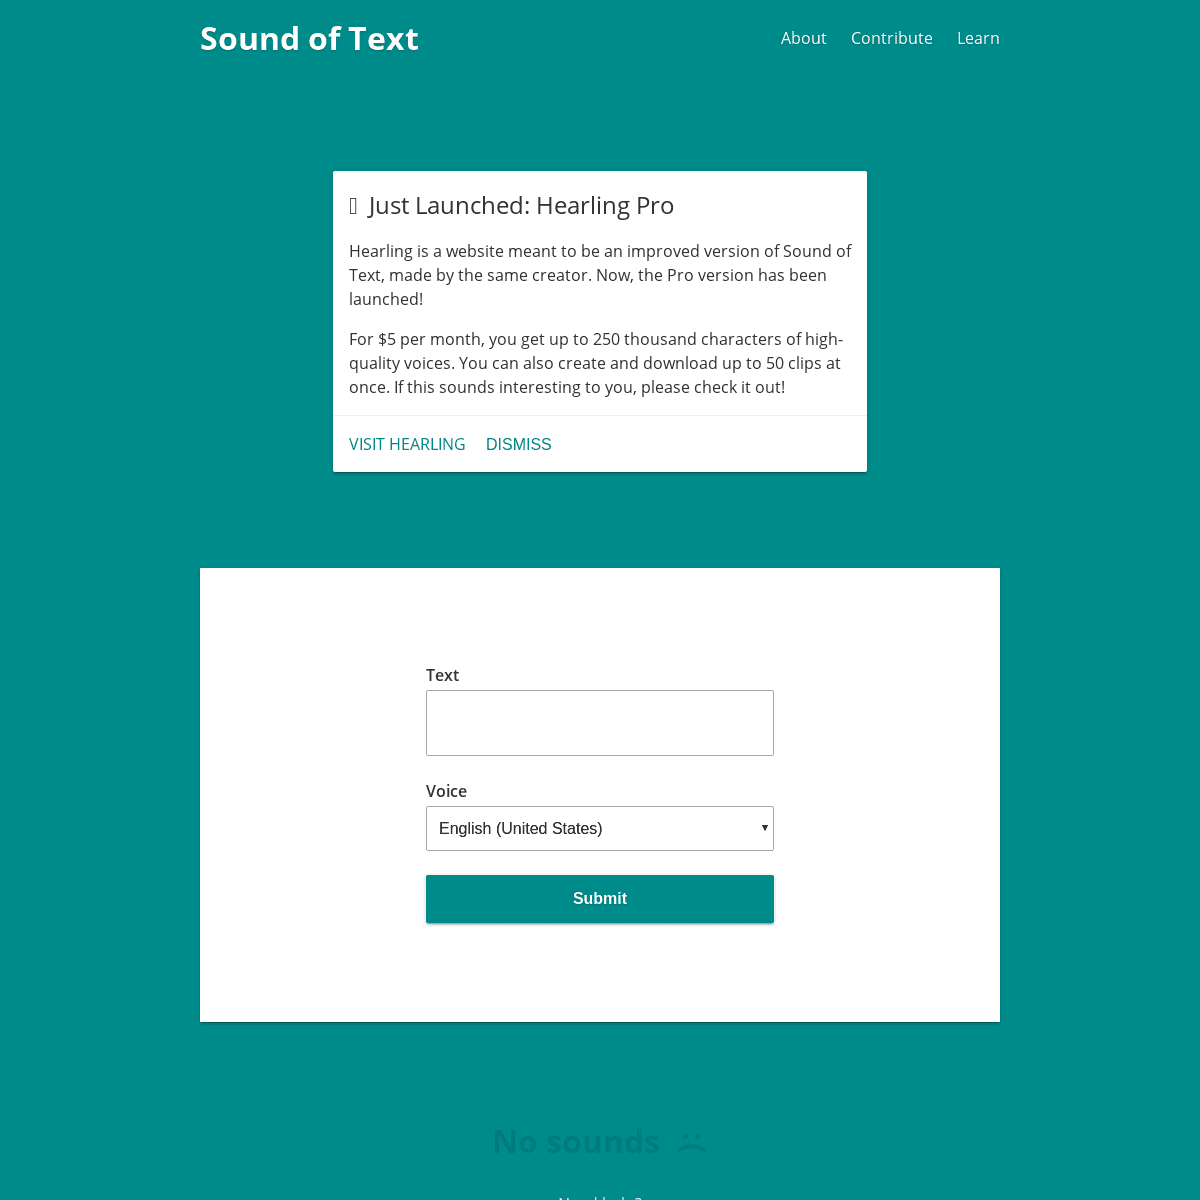 A complete backup of soundoftext.com